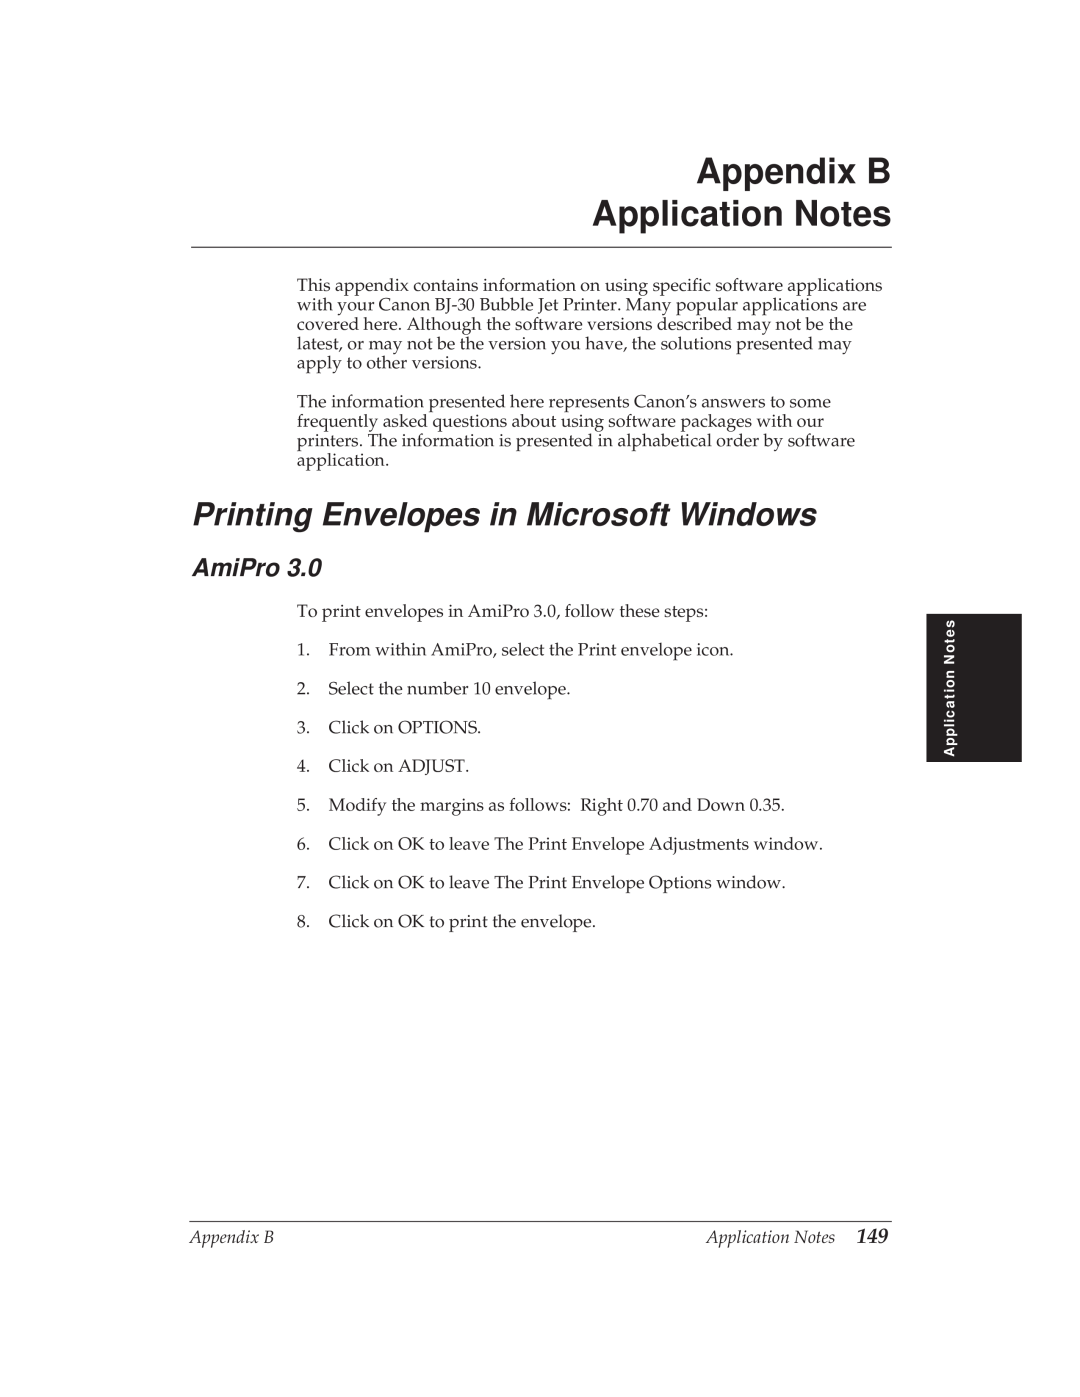 Canon BJ-30 manual Appendix B Application Notes, Printing Envelopes in Microsoft Windows, AmiPro 